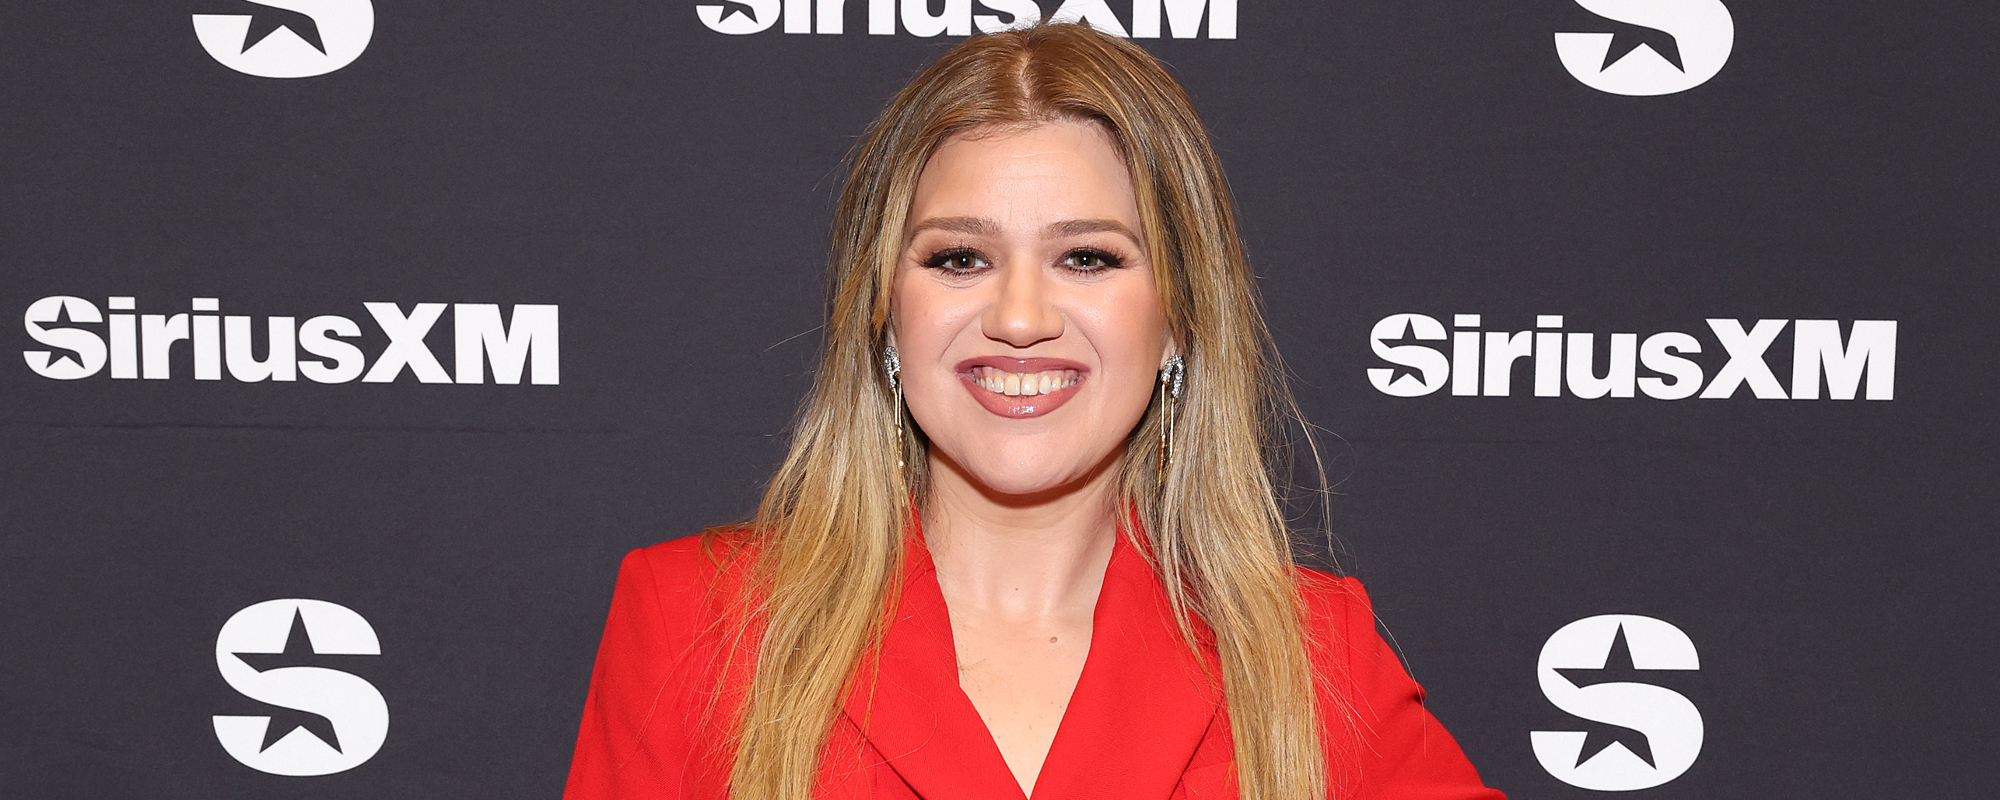 Kelly Clarkson Anoints Olivia Rodrigo the “New Alanis,” Credits Alanis Morissette for Songwriting Career